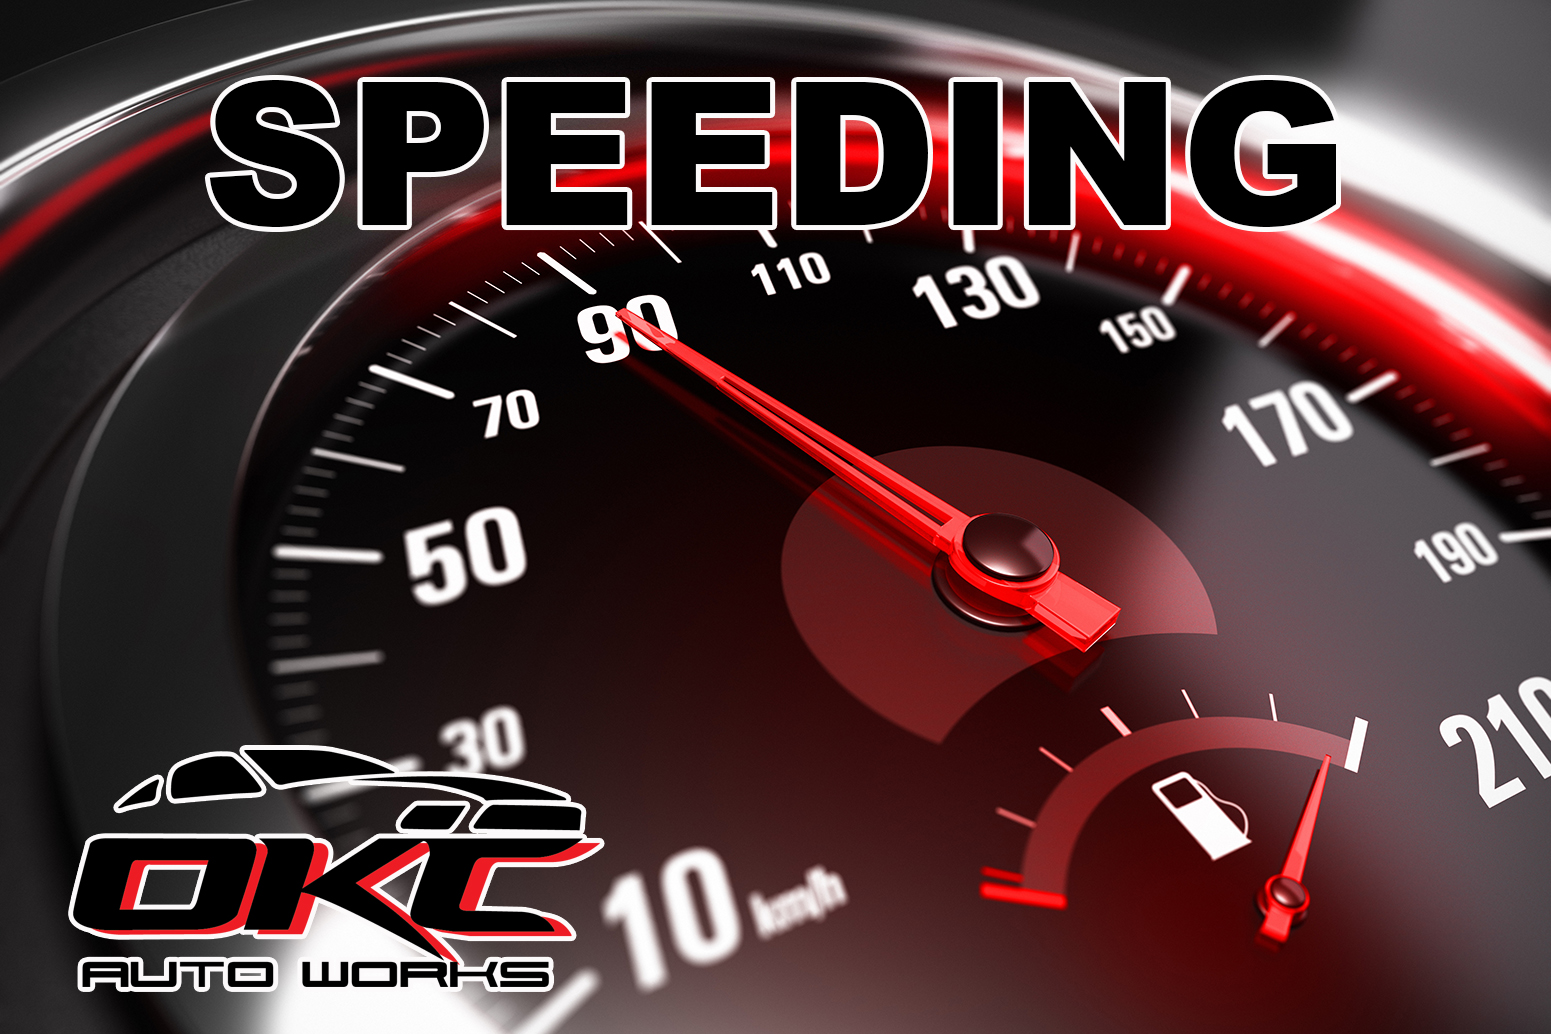 speeding is more hazardous than one might think; speeding can kill you